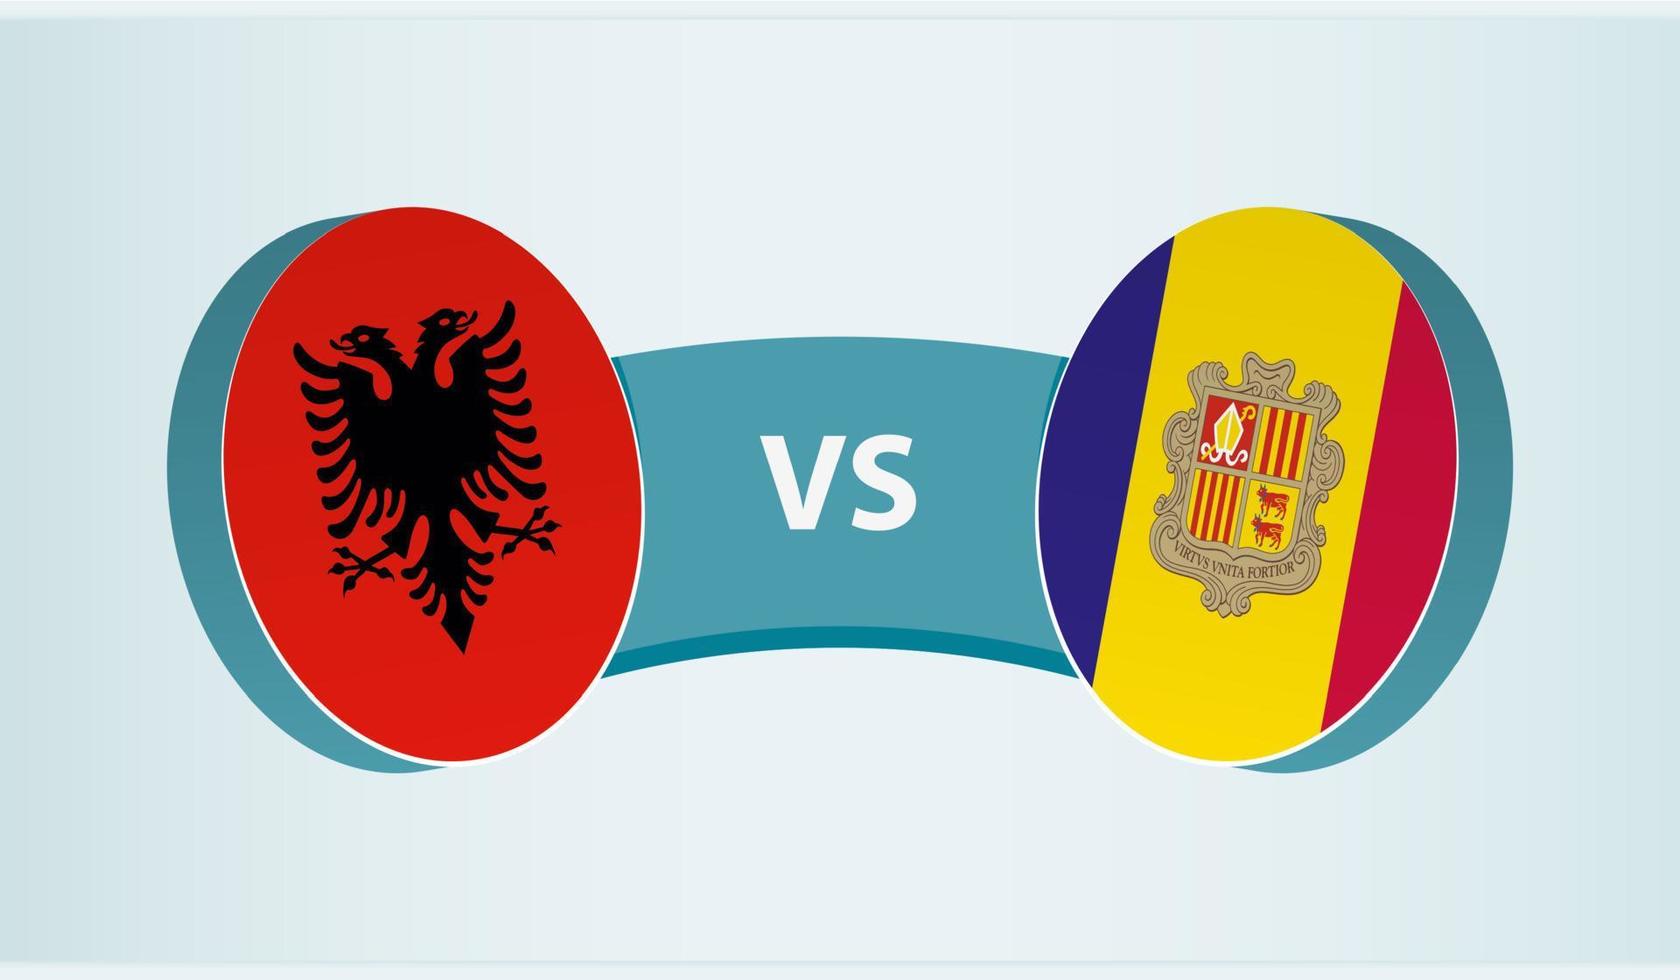 Albania versus Andorra, team sports competition concept. vector